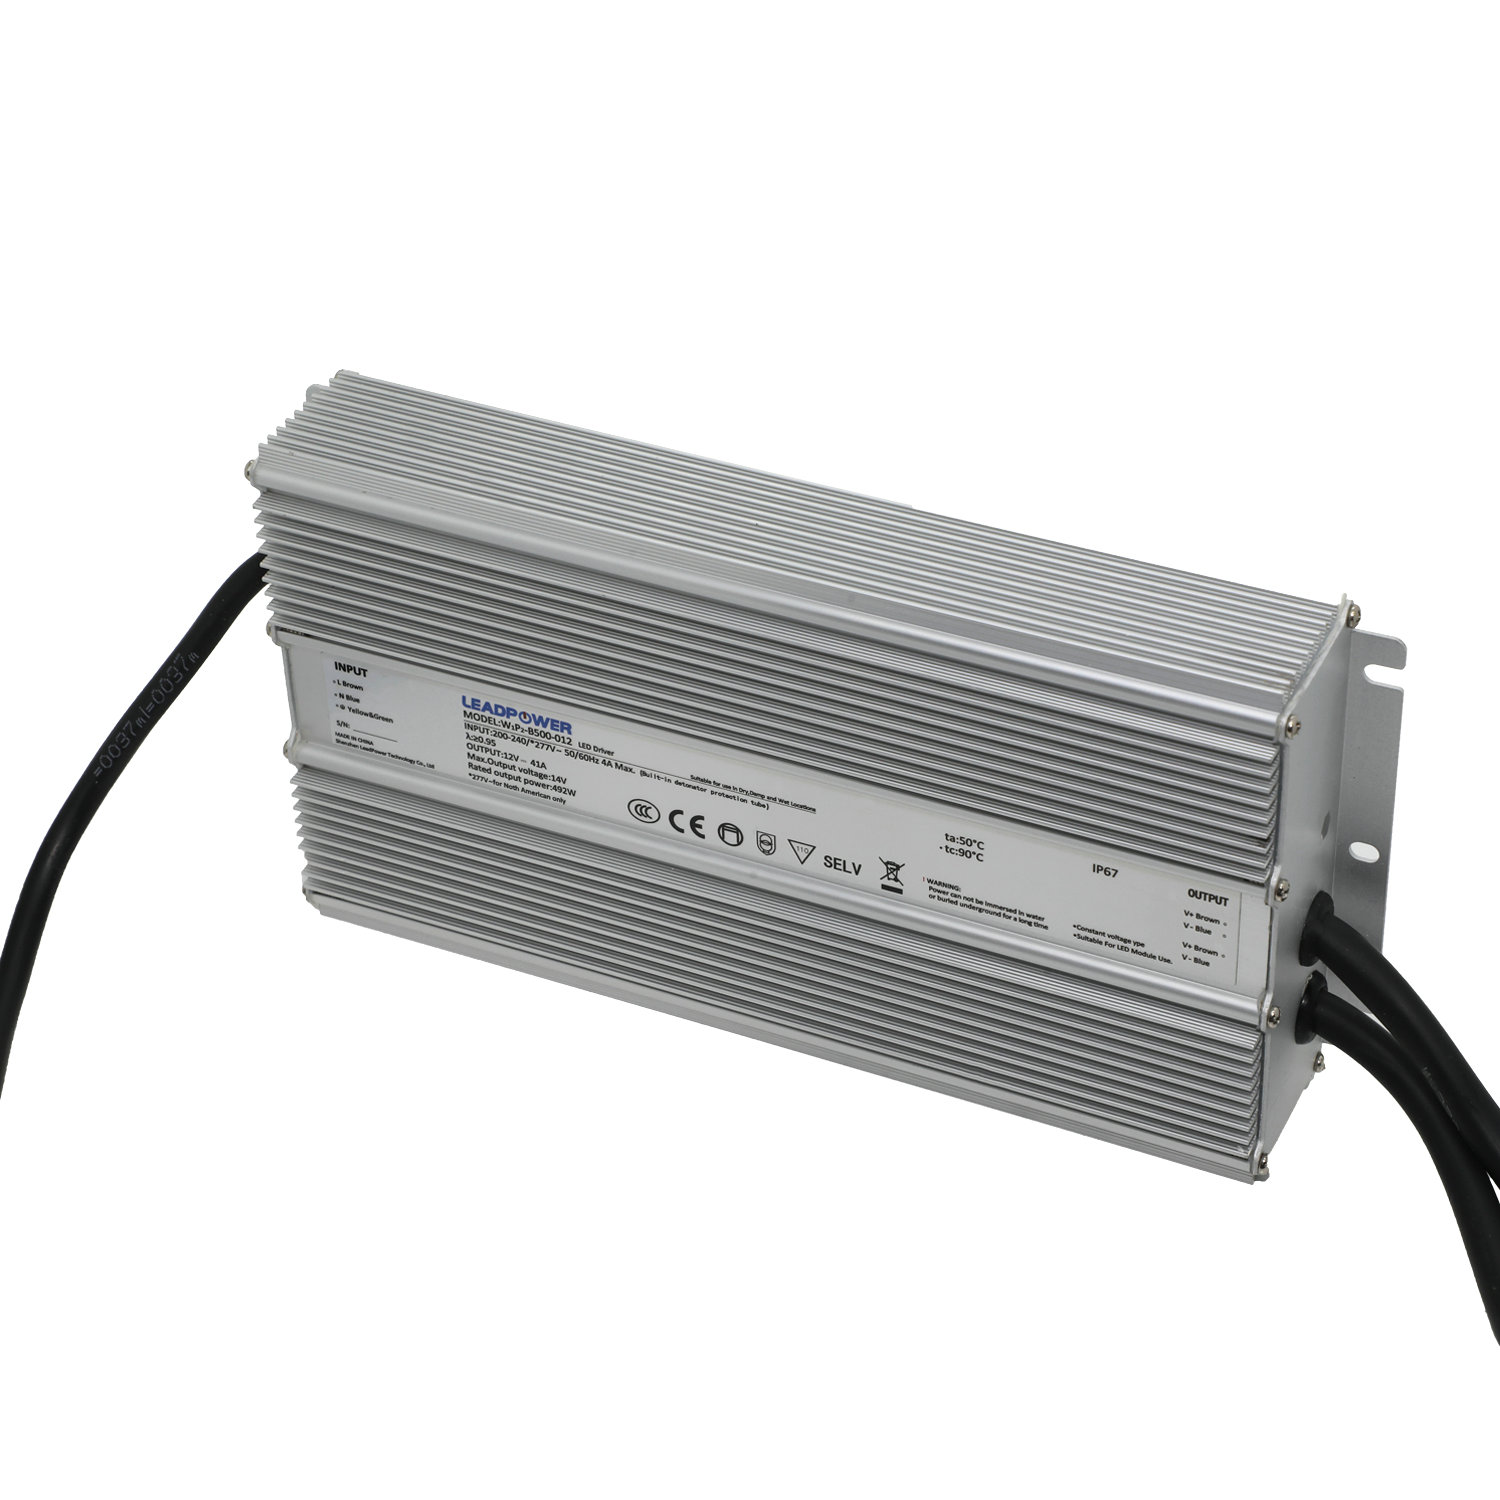 WAP-B500 Series Waterproof LED Power Supply